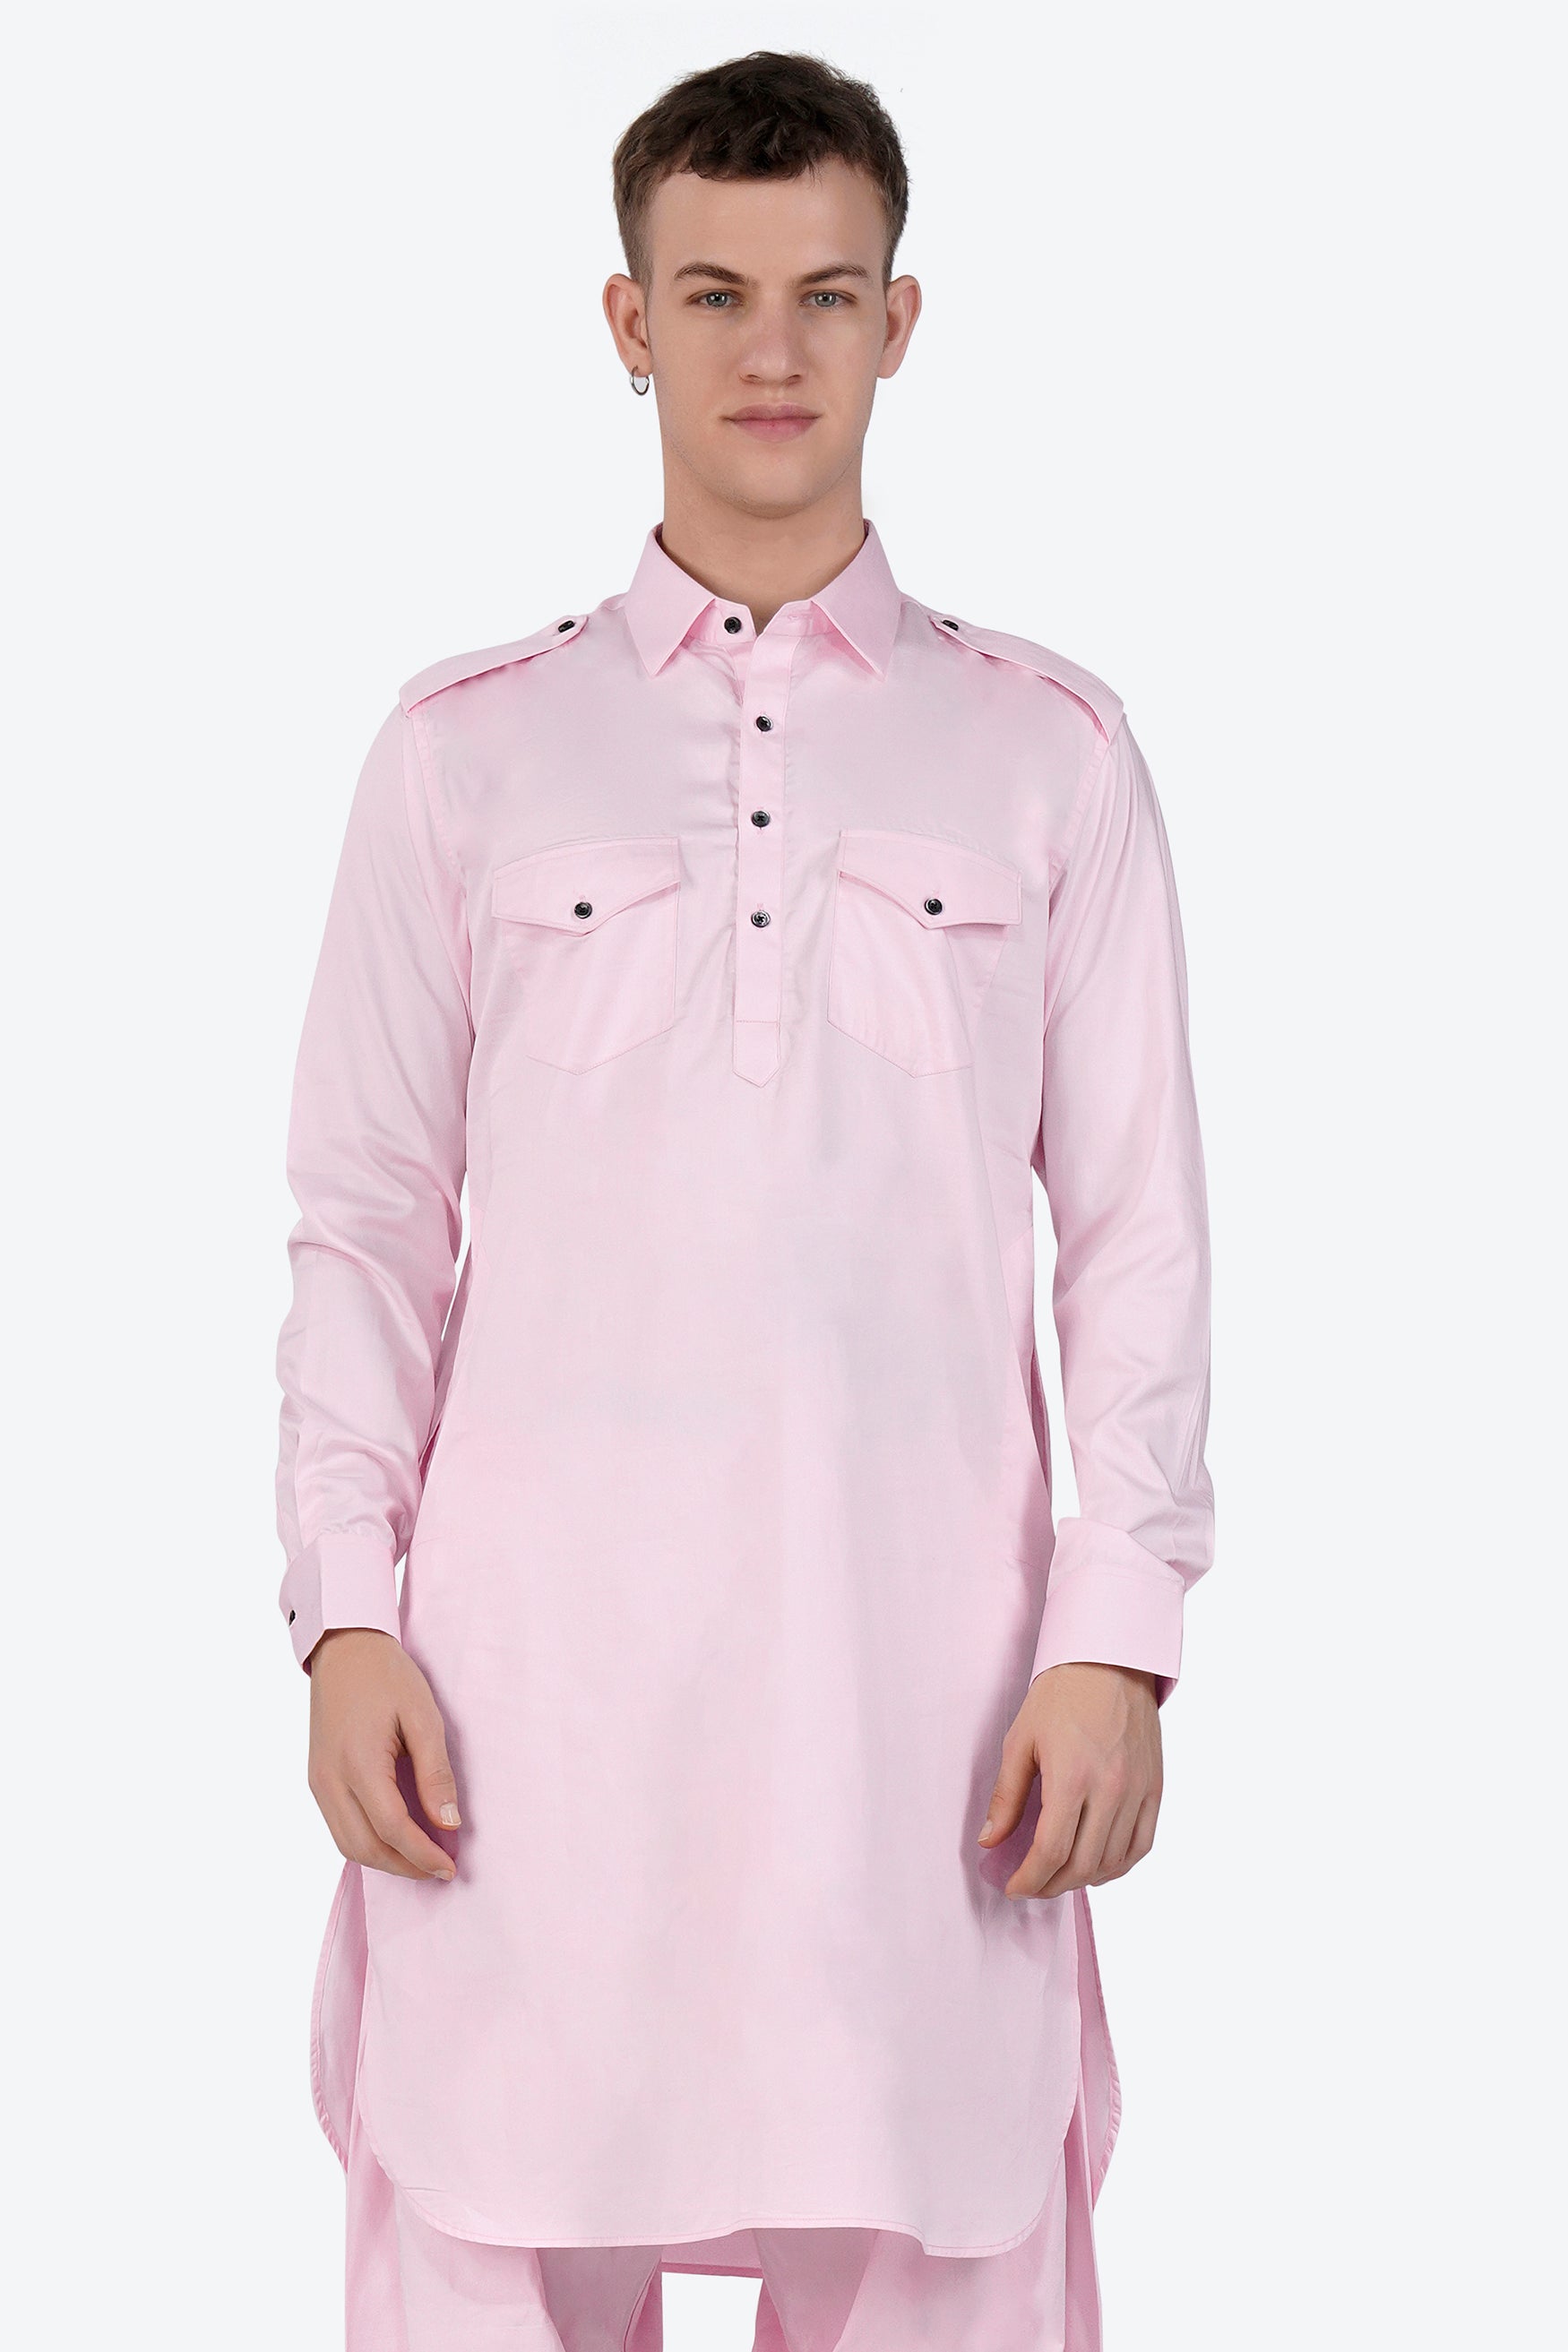 Carousel Pink Subtle Sheen Super Soft Premium Cotton Pathani